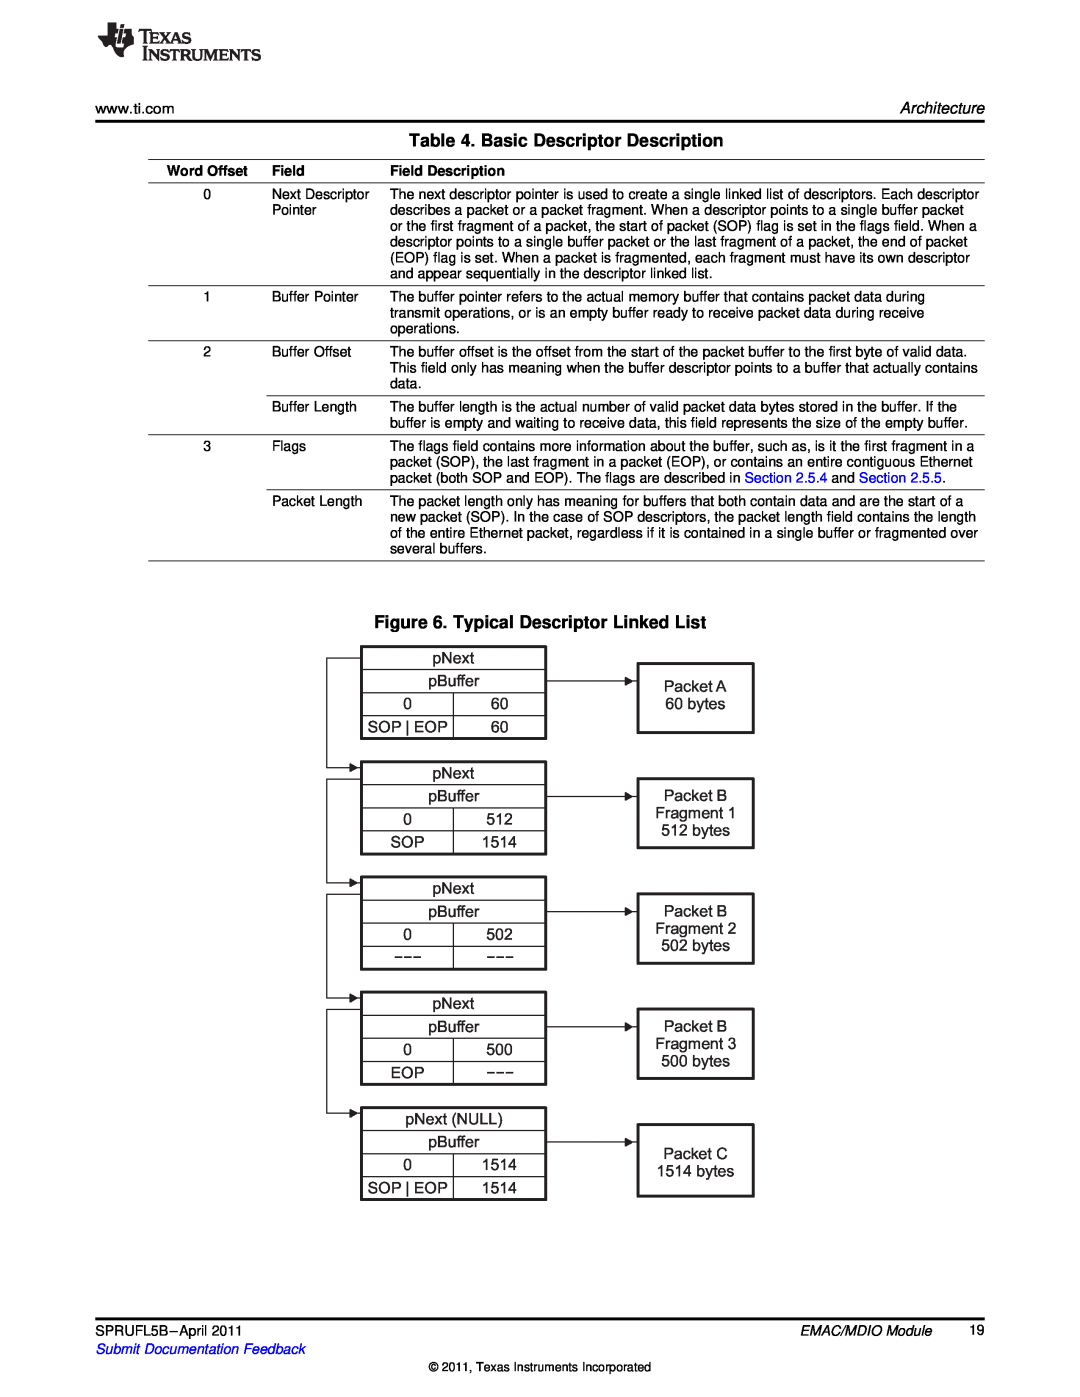 Texas Instruments TMS320C674X manual Basic Descriptor Description, Typical Descriptor Linked List, Word Offset 